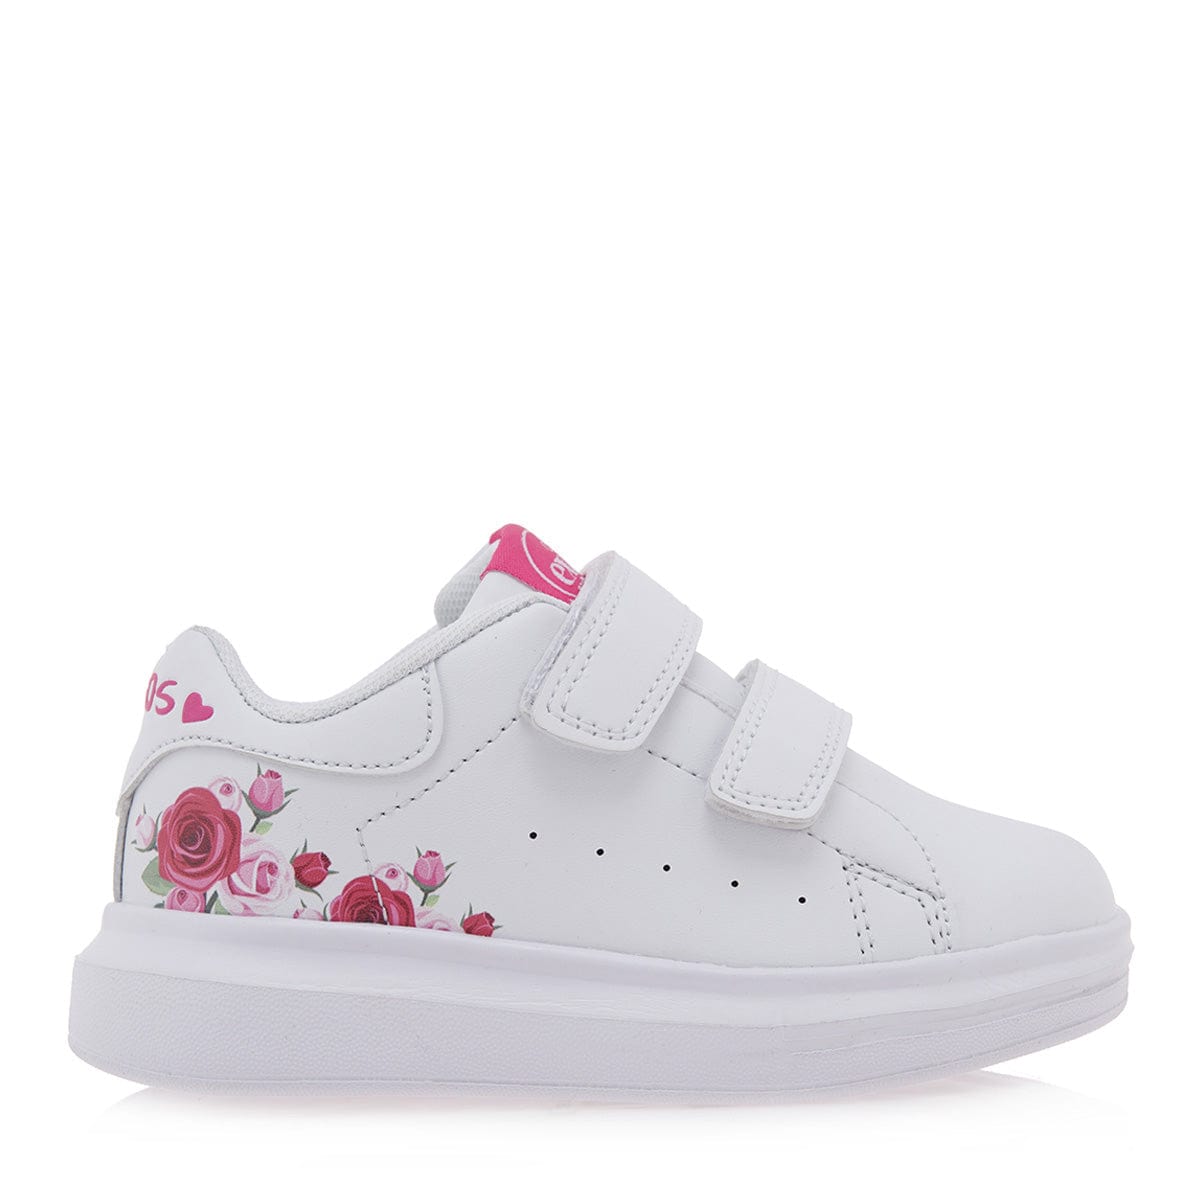 Exe Kids sneakers λευκό λουλούδι φούξια / αυτοκόλλητο 422-La Scarpa Shoes Exe Kids sneakers λευκό λουλούδι φούξια / αυτοκόλλητο 422 GIRLS EXE KIDS